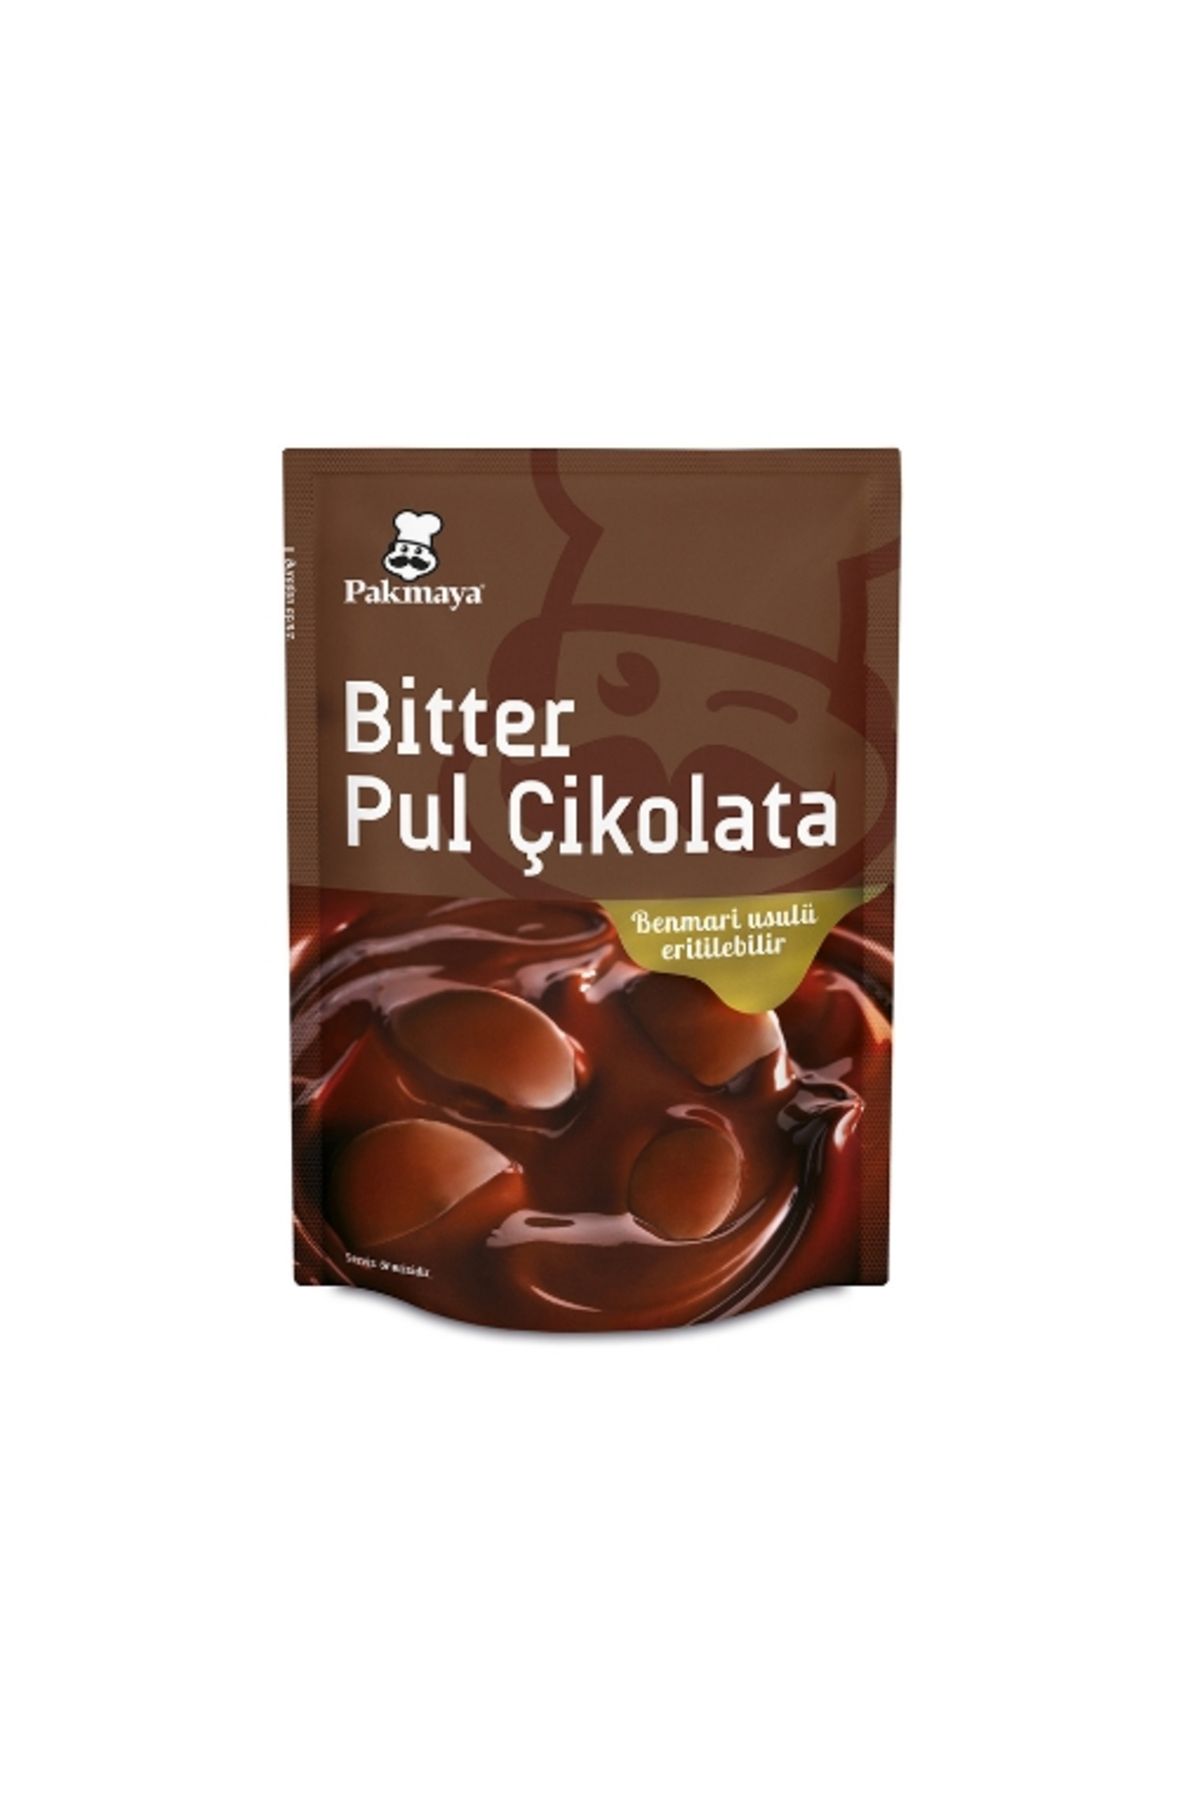 Pakmaya Bitter Pul Çikolata 100 Gr. (24'LÜ)